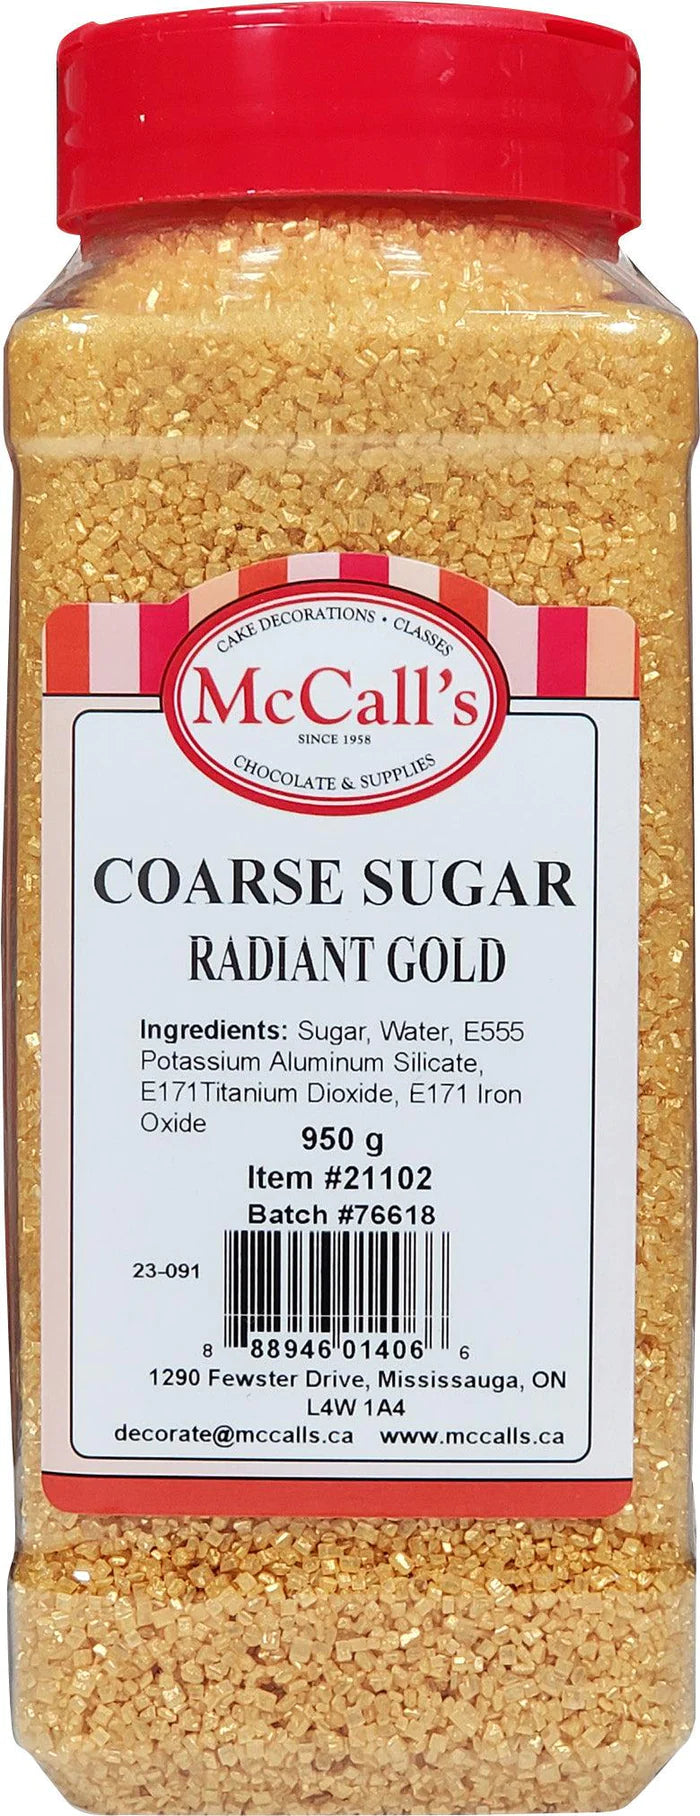 McCall's - Sugar Coarse Radiant Gold